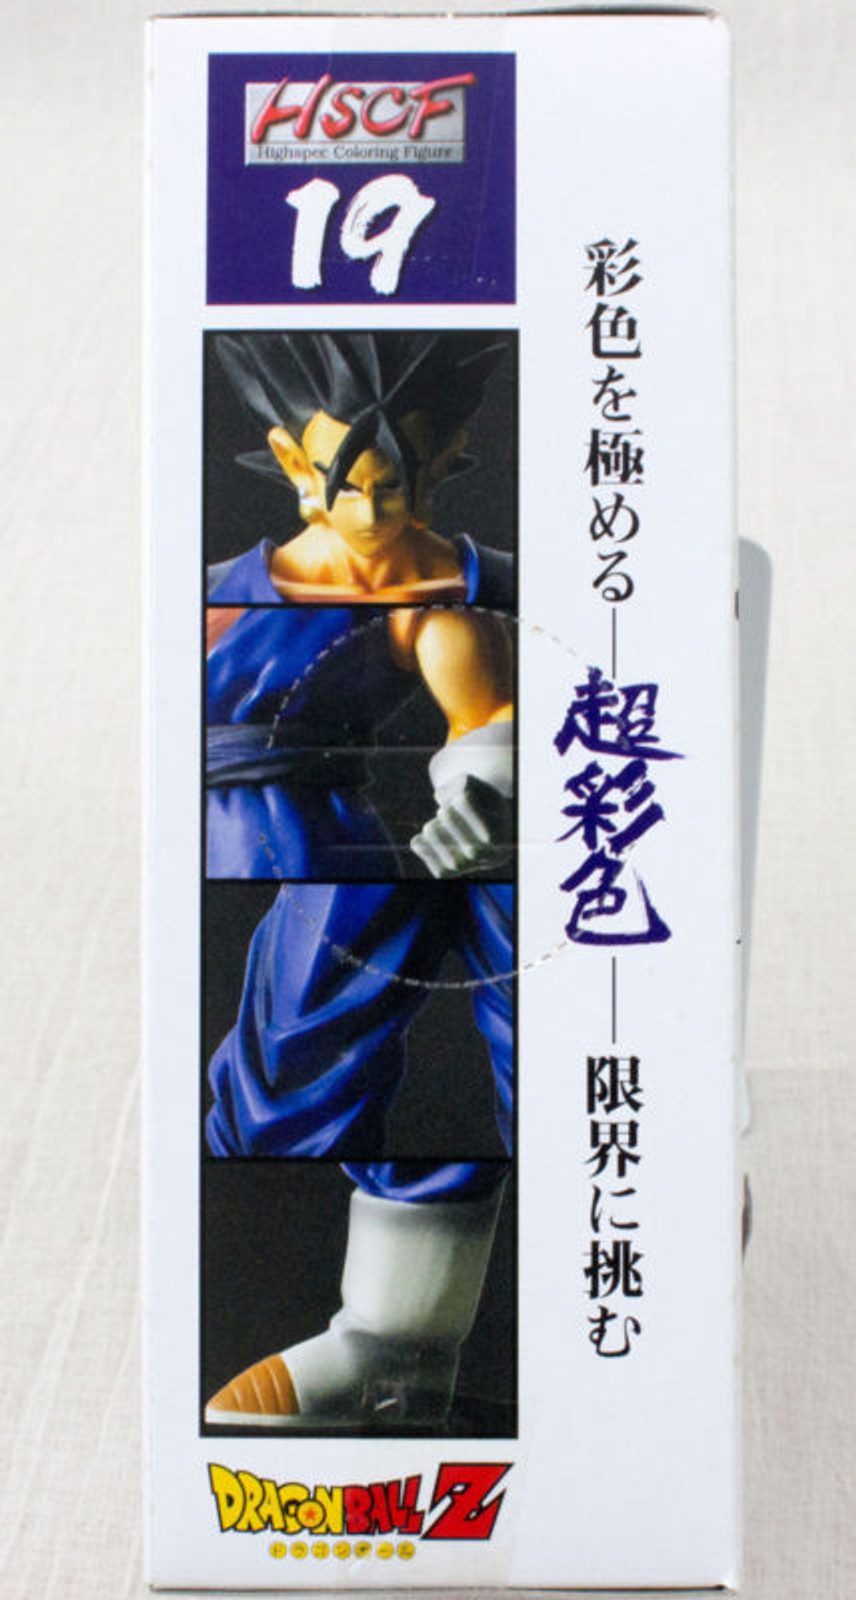 Dragon Ball Z Vegetto HSCF Figure high spec coloring 19 JAPAN ANIME MANGA